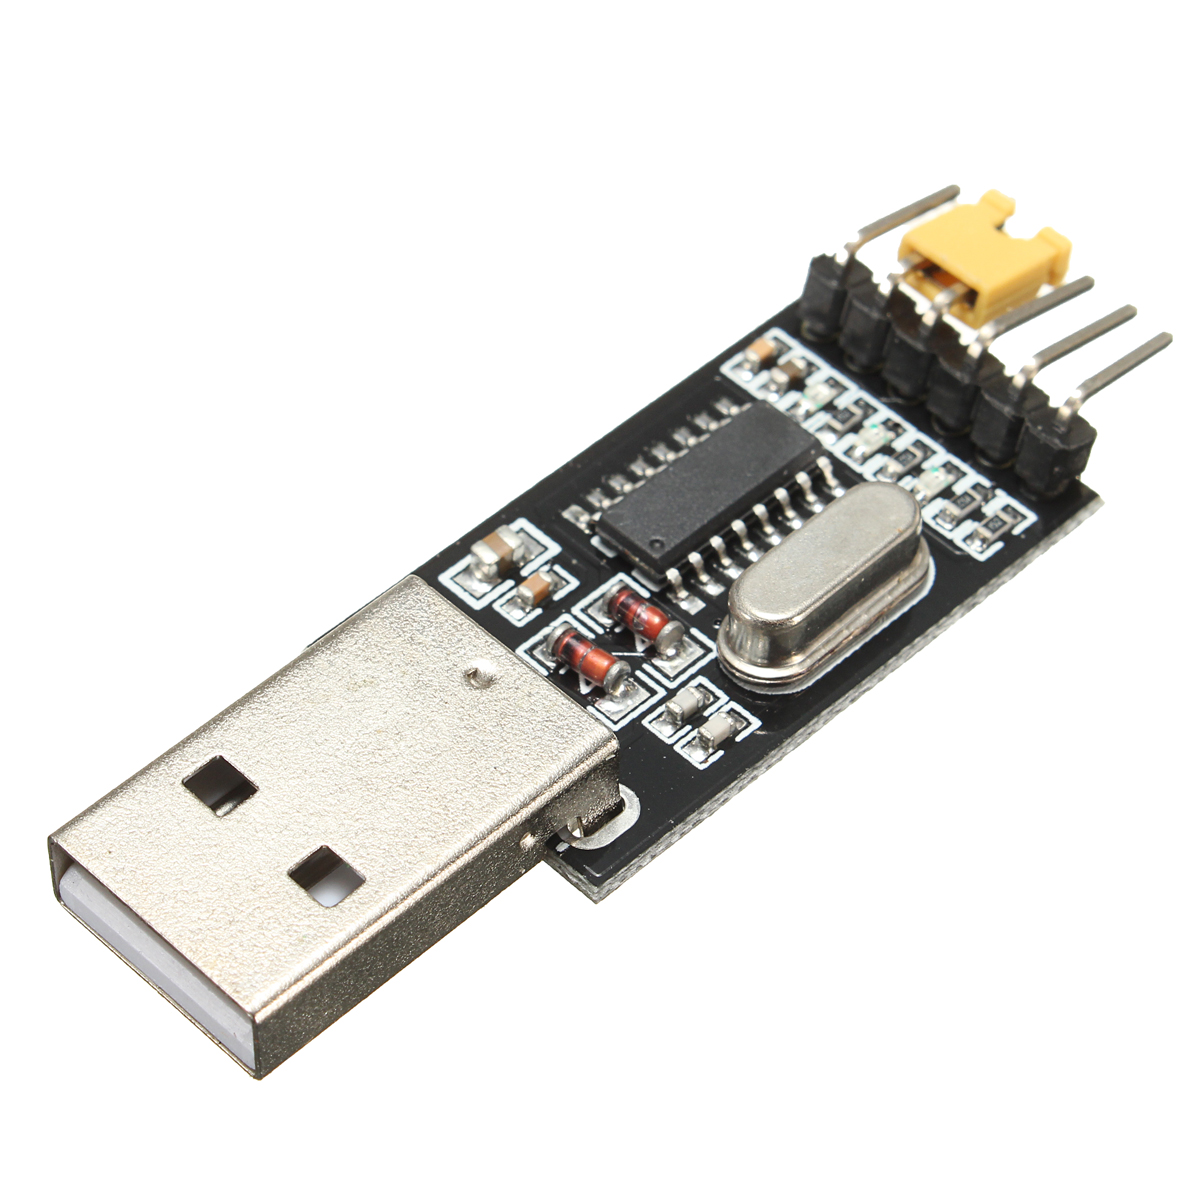 33V-5V-USB-to-TTL-Converter-CH340G-UART-Serial-Adapter-Module-STC-1232728-1